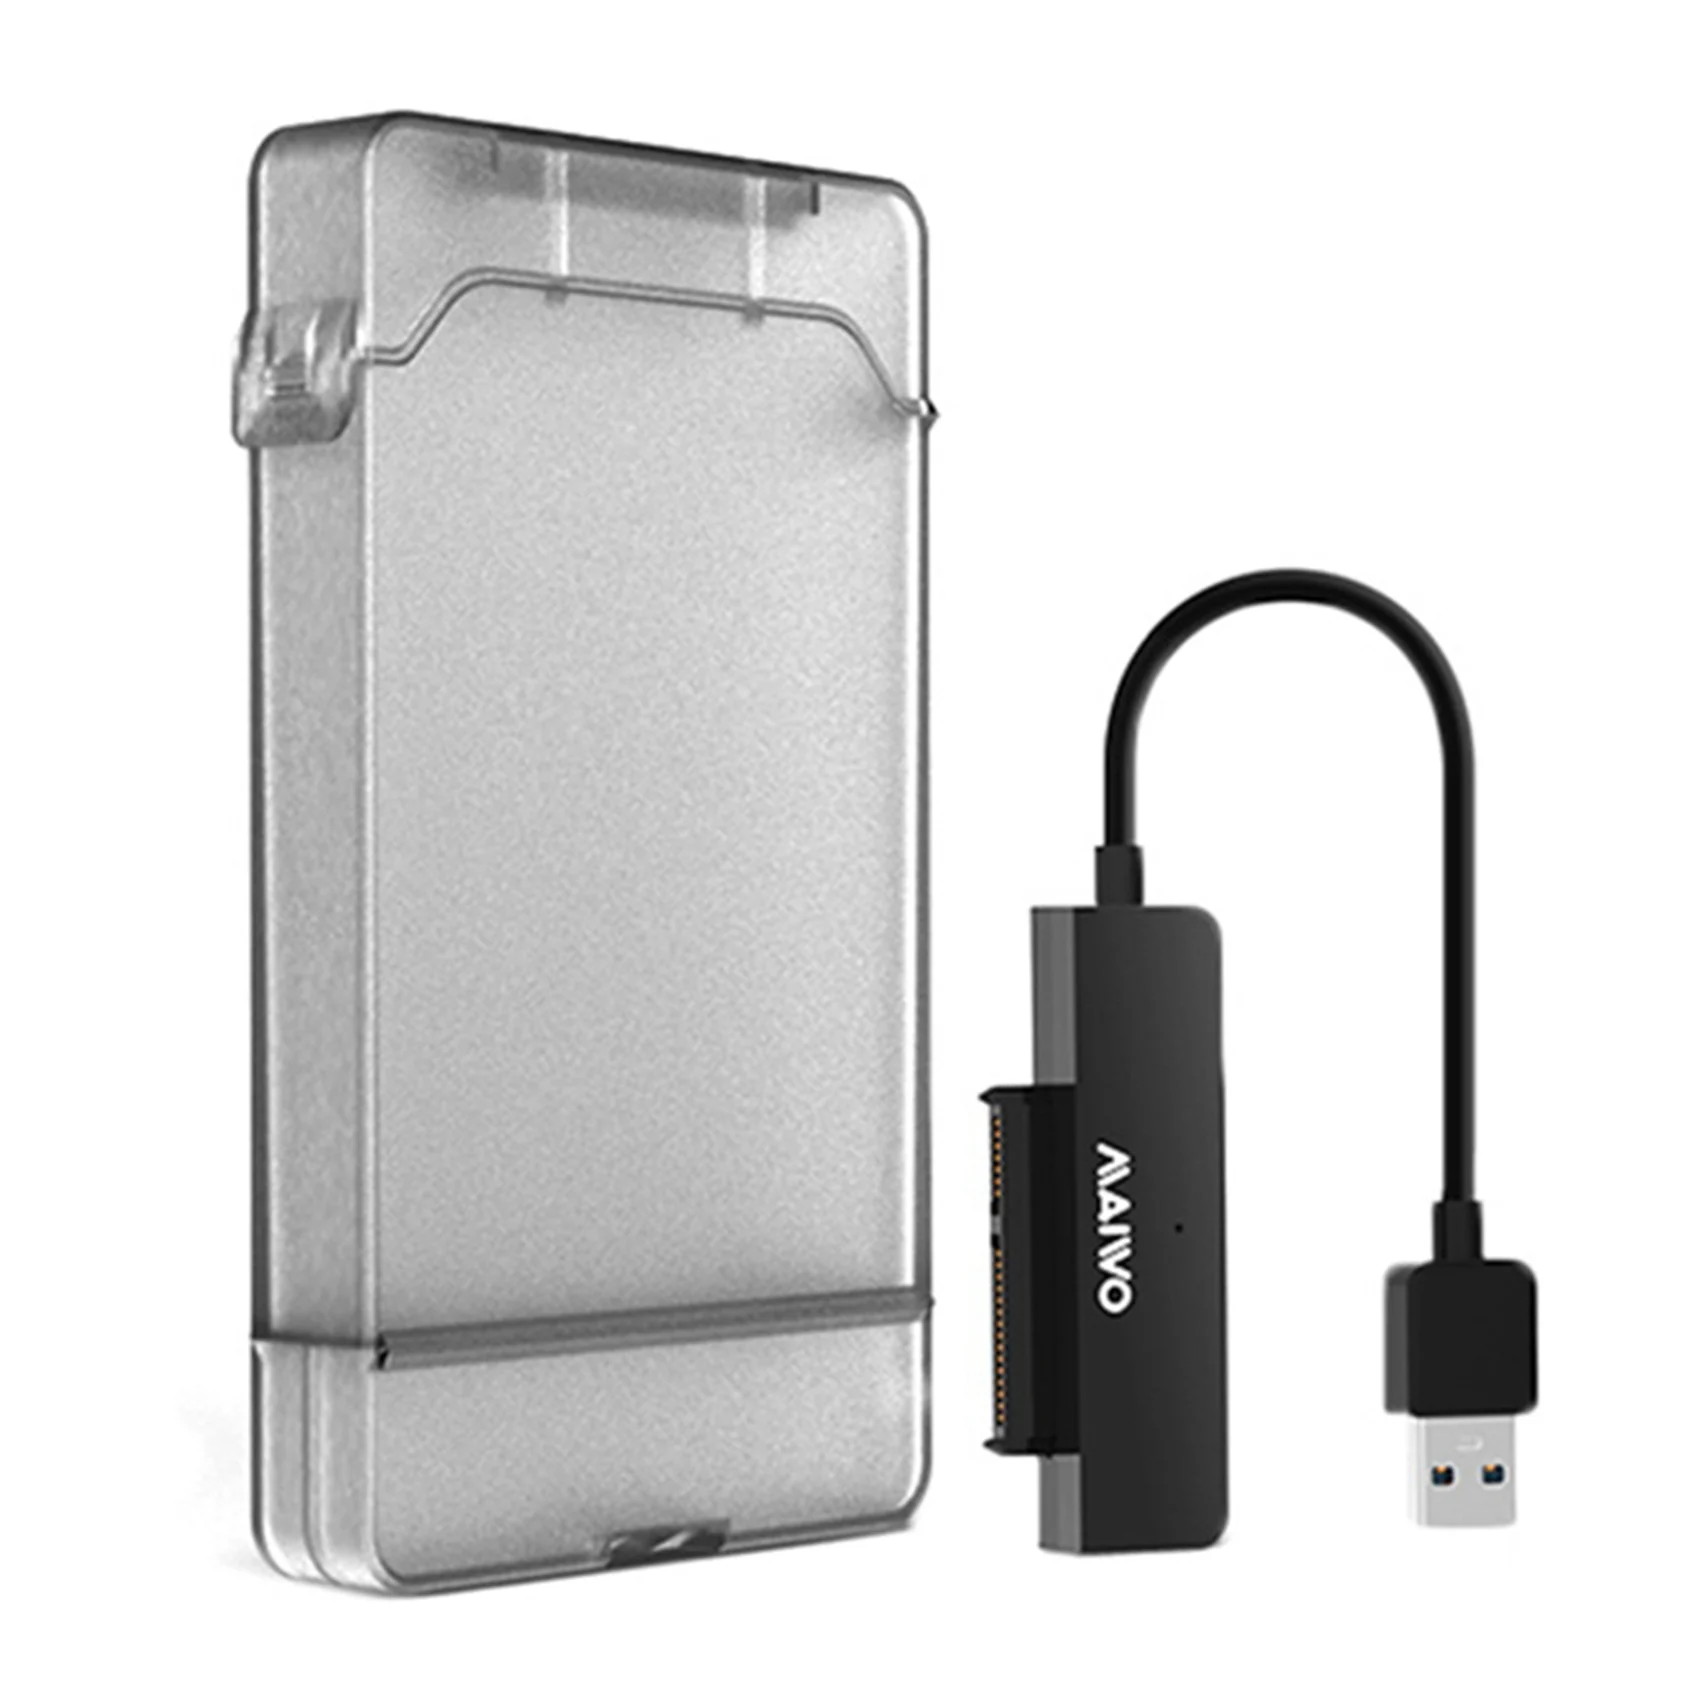 

Maiwo K104 HDD SSD Enclosure USB 3.0 to SATA 3.0 HDD Hard Drive Enclosure Support 2.5 Inch SSD Tool Free(Black)